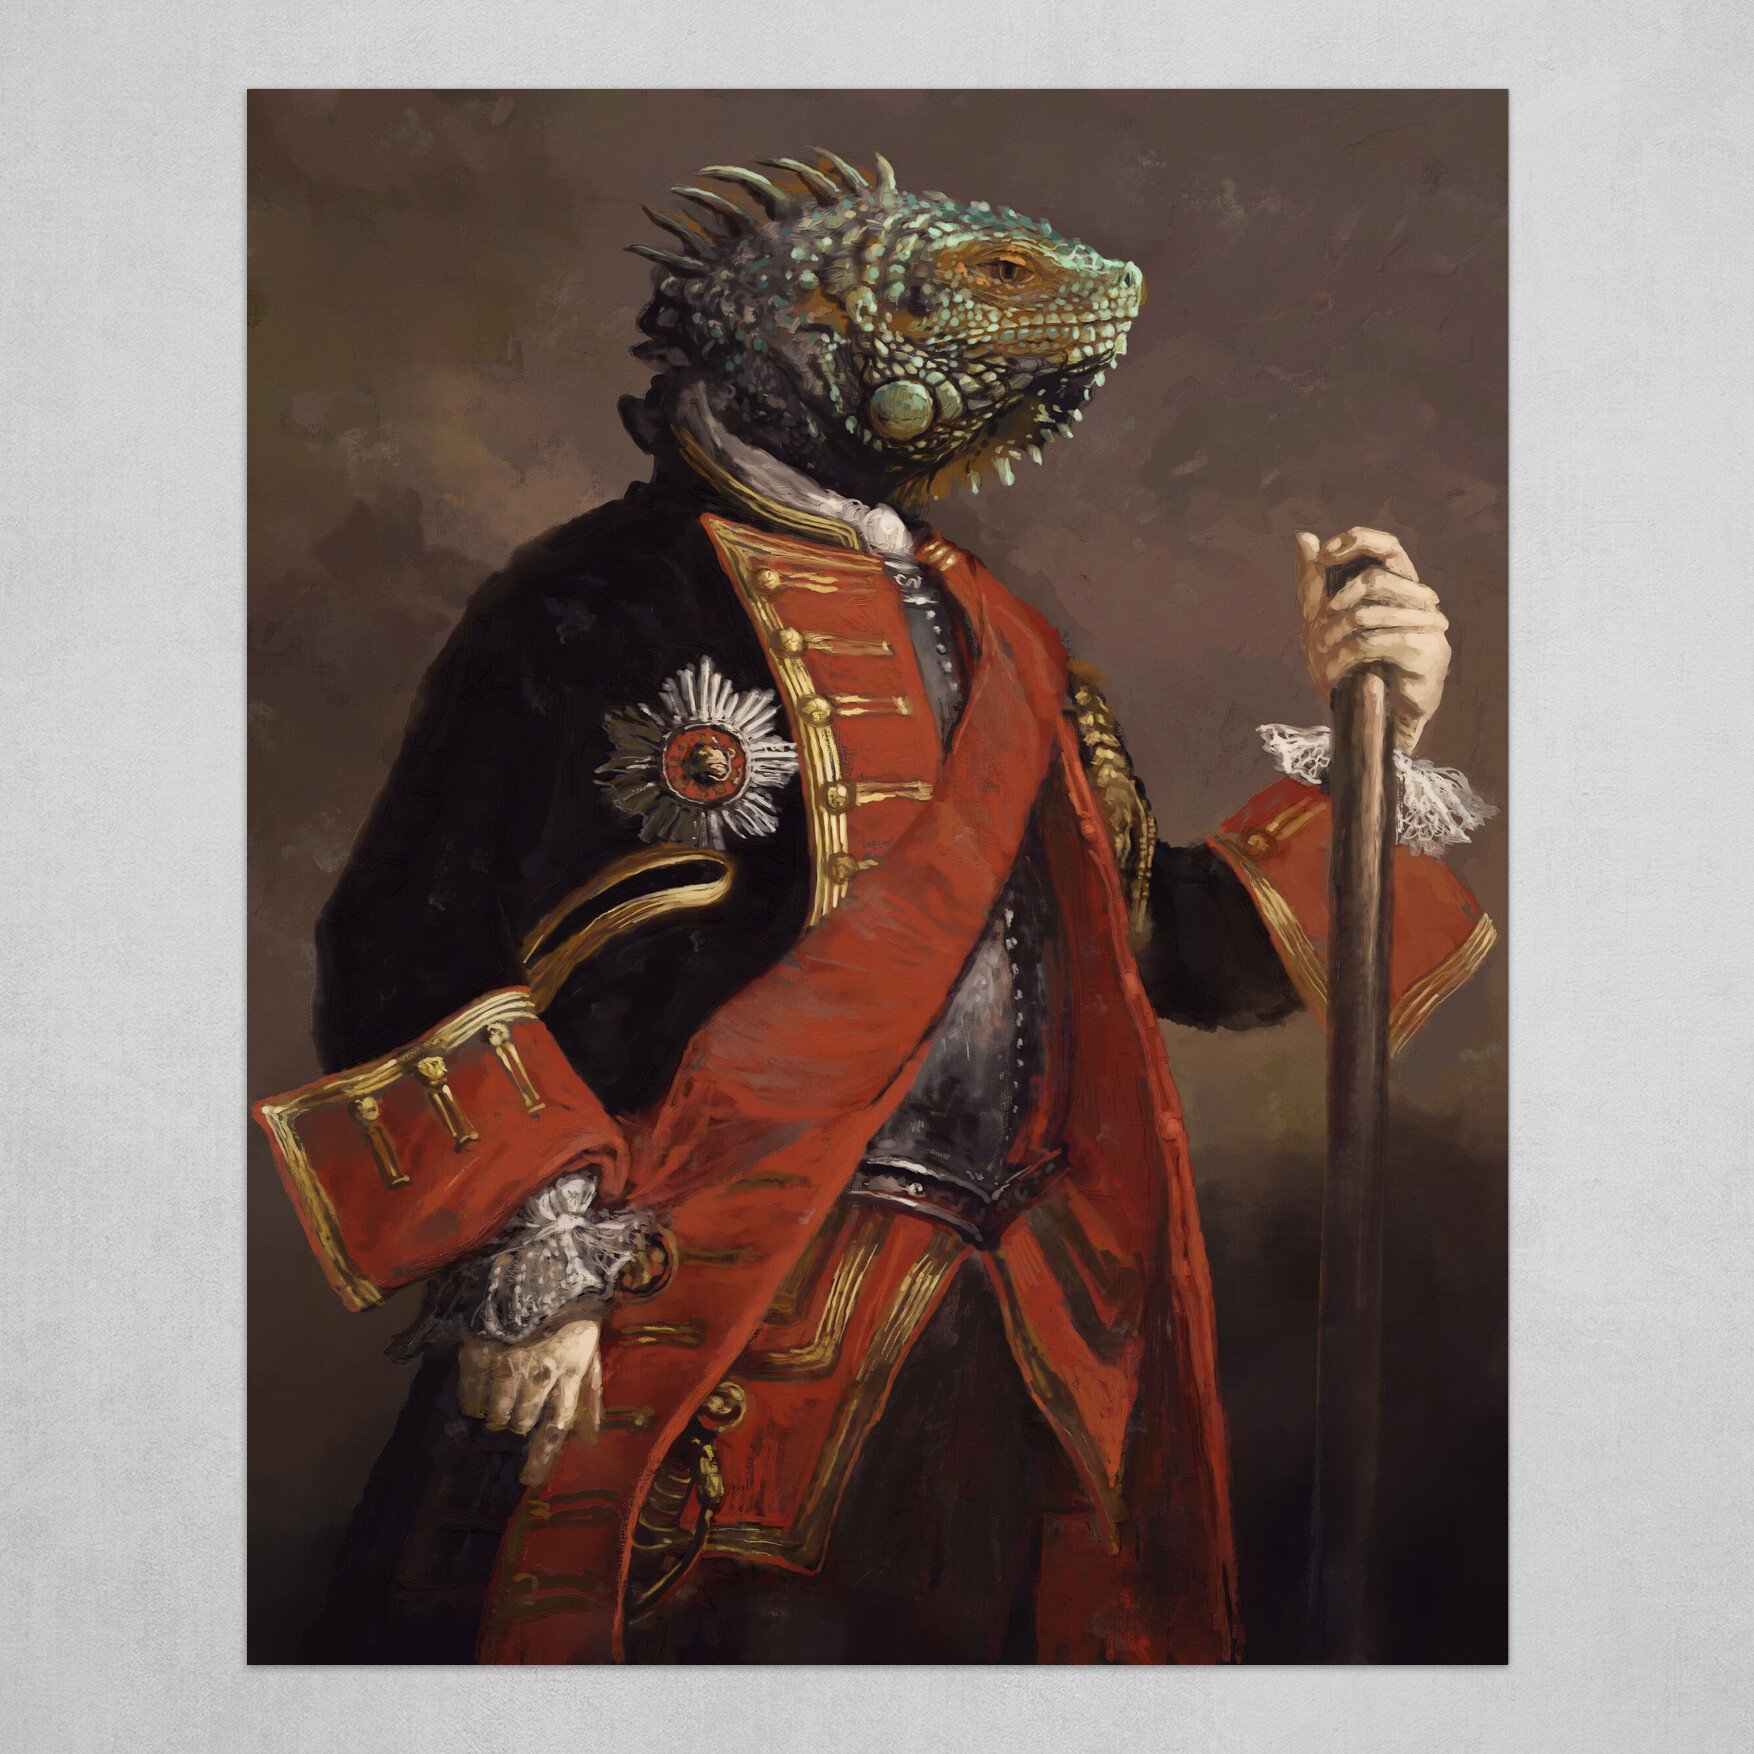 General Lizard the 1st